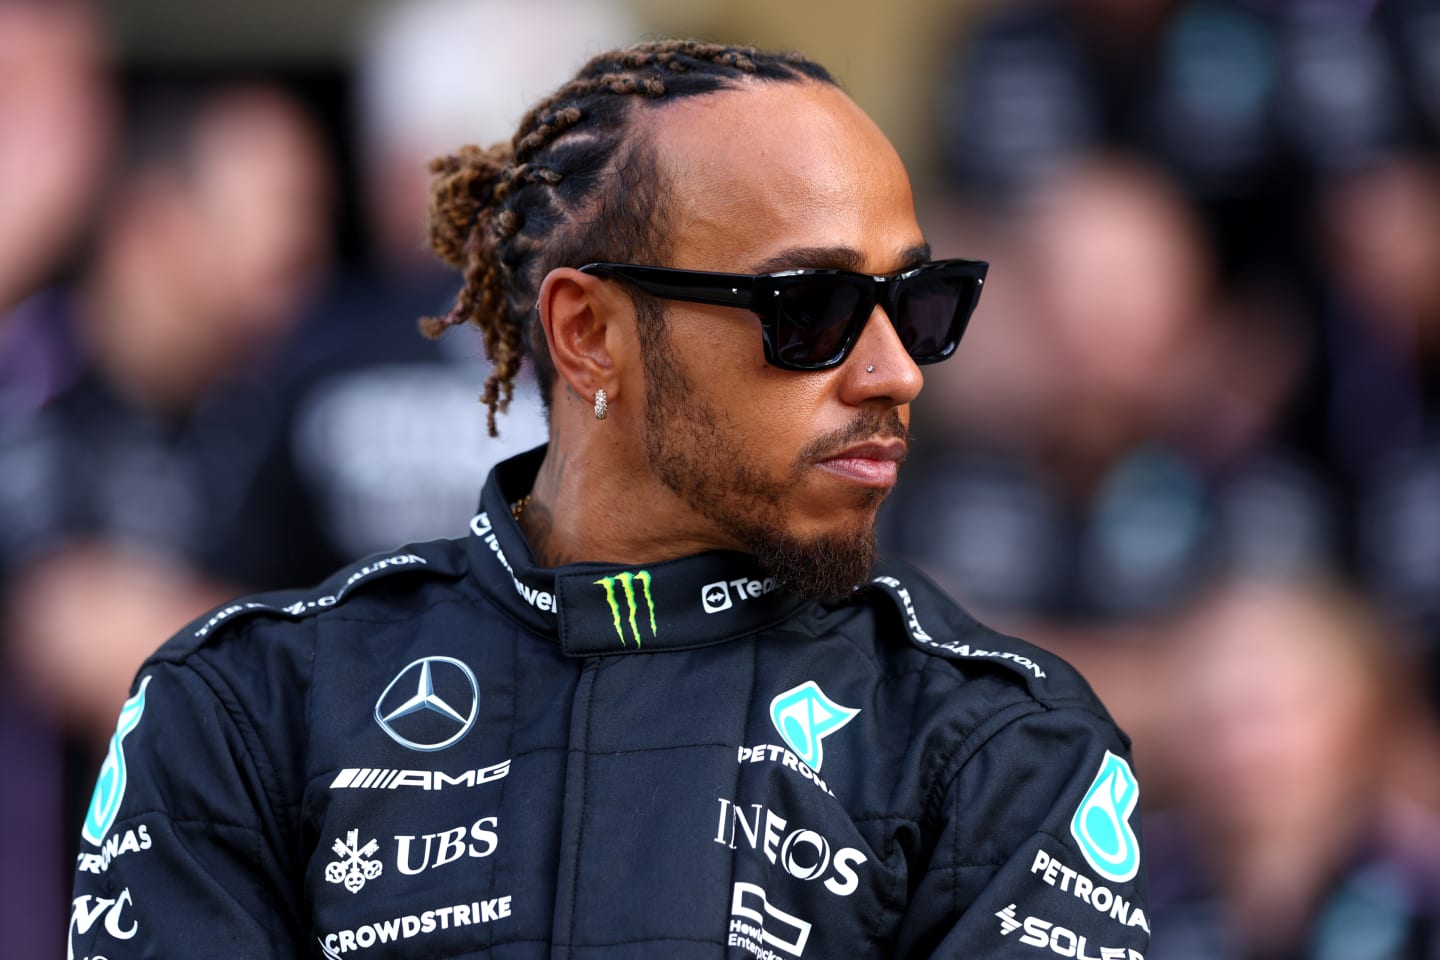 ABU DHABI, UNITED ARAB EMIRATES - NOVEMBER 23: Lewis Hamilton of Great Britain and Mercedes looks